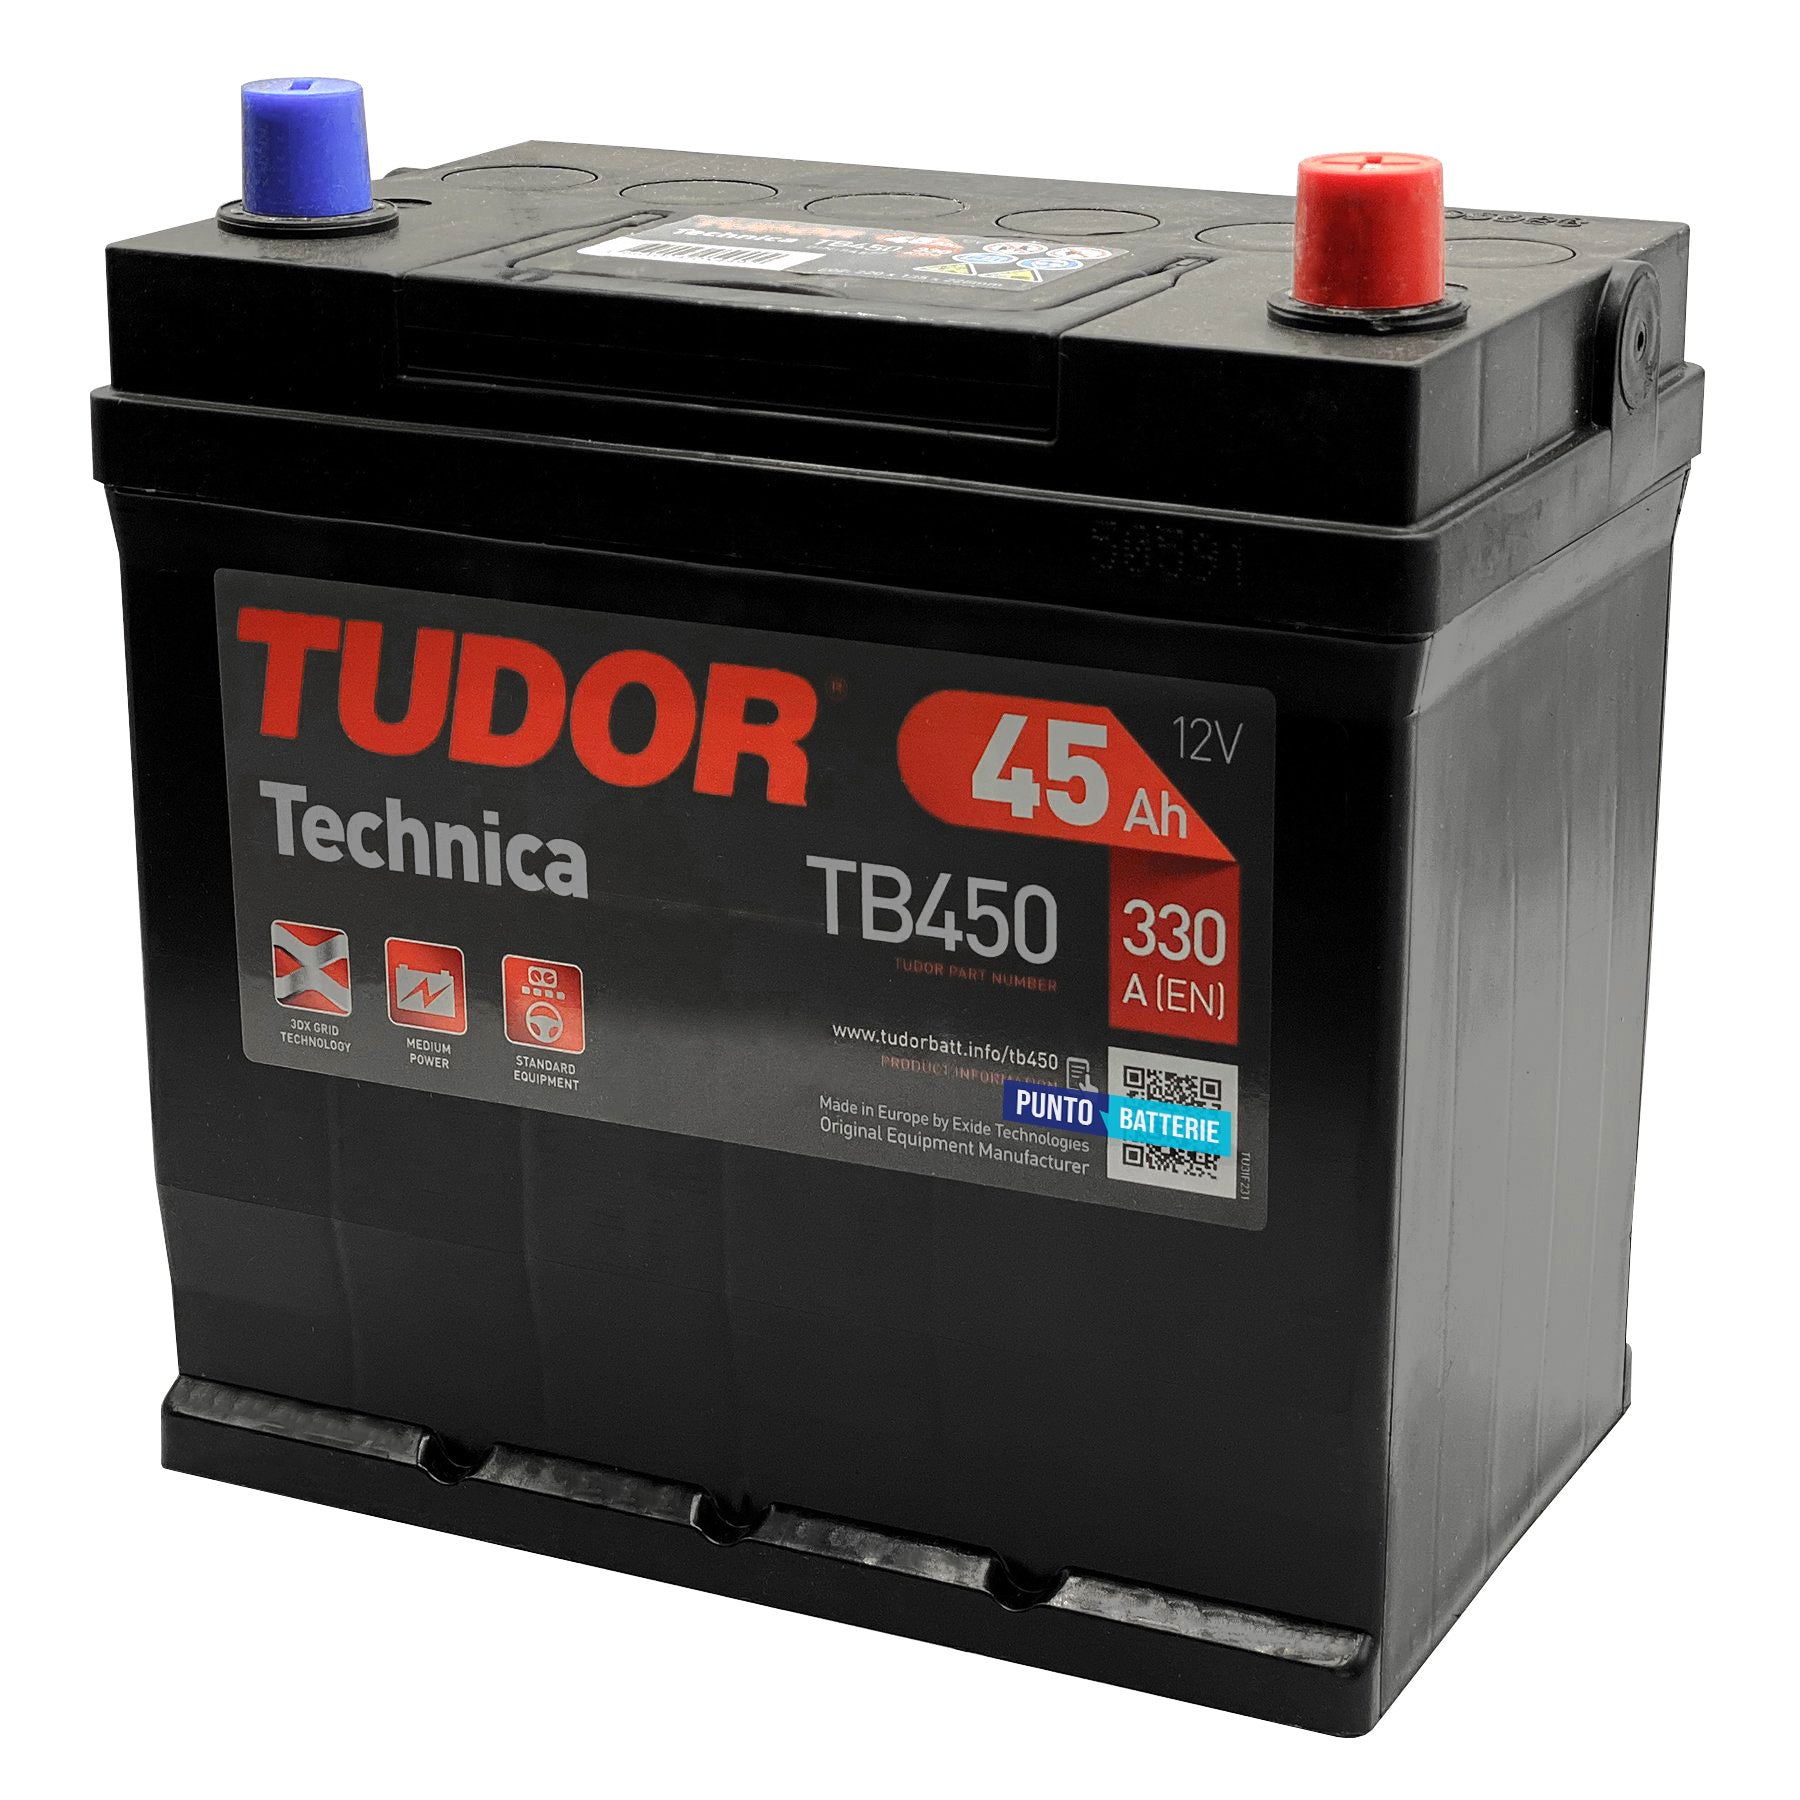 Batteria Tudor TB450 - Technica (12V, 45Ah, 330A) - Puntobatterie